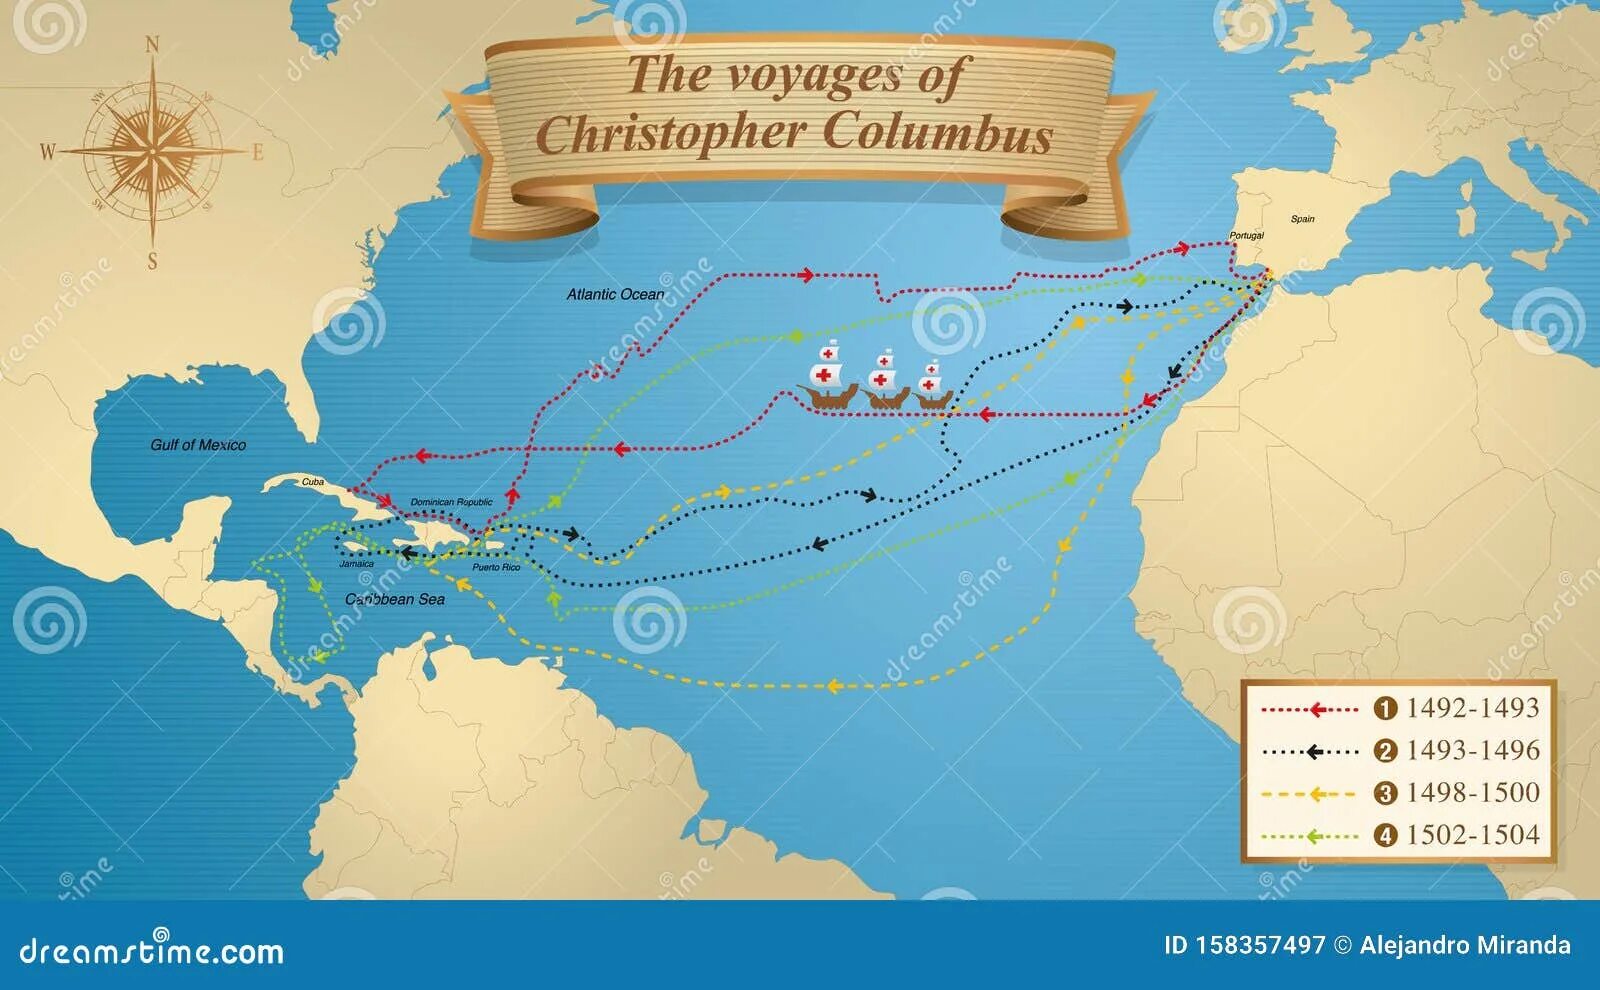 Путешествие Христофора Колумба 1492. Маршрут путешествия Христофора Колумба. Маршрут путешествия Христофора Колумба 1492-1493.